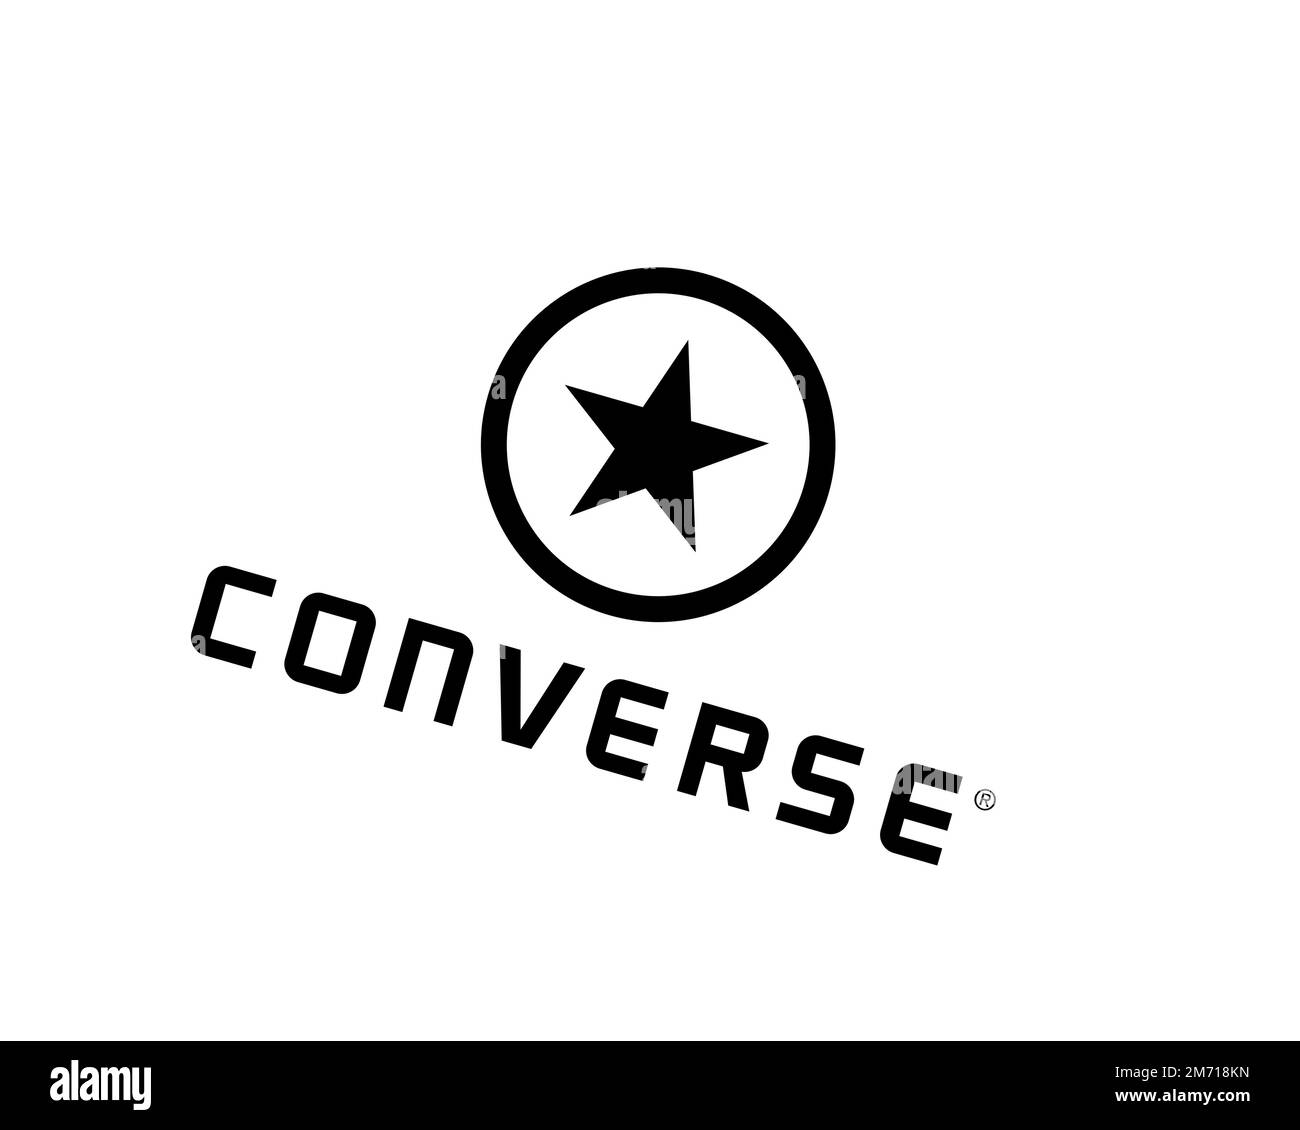 Converse shoe company, rotated logo, white background B Stock Photo